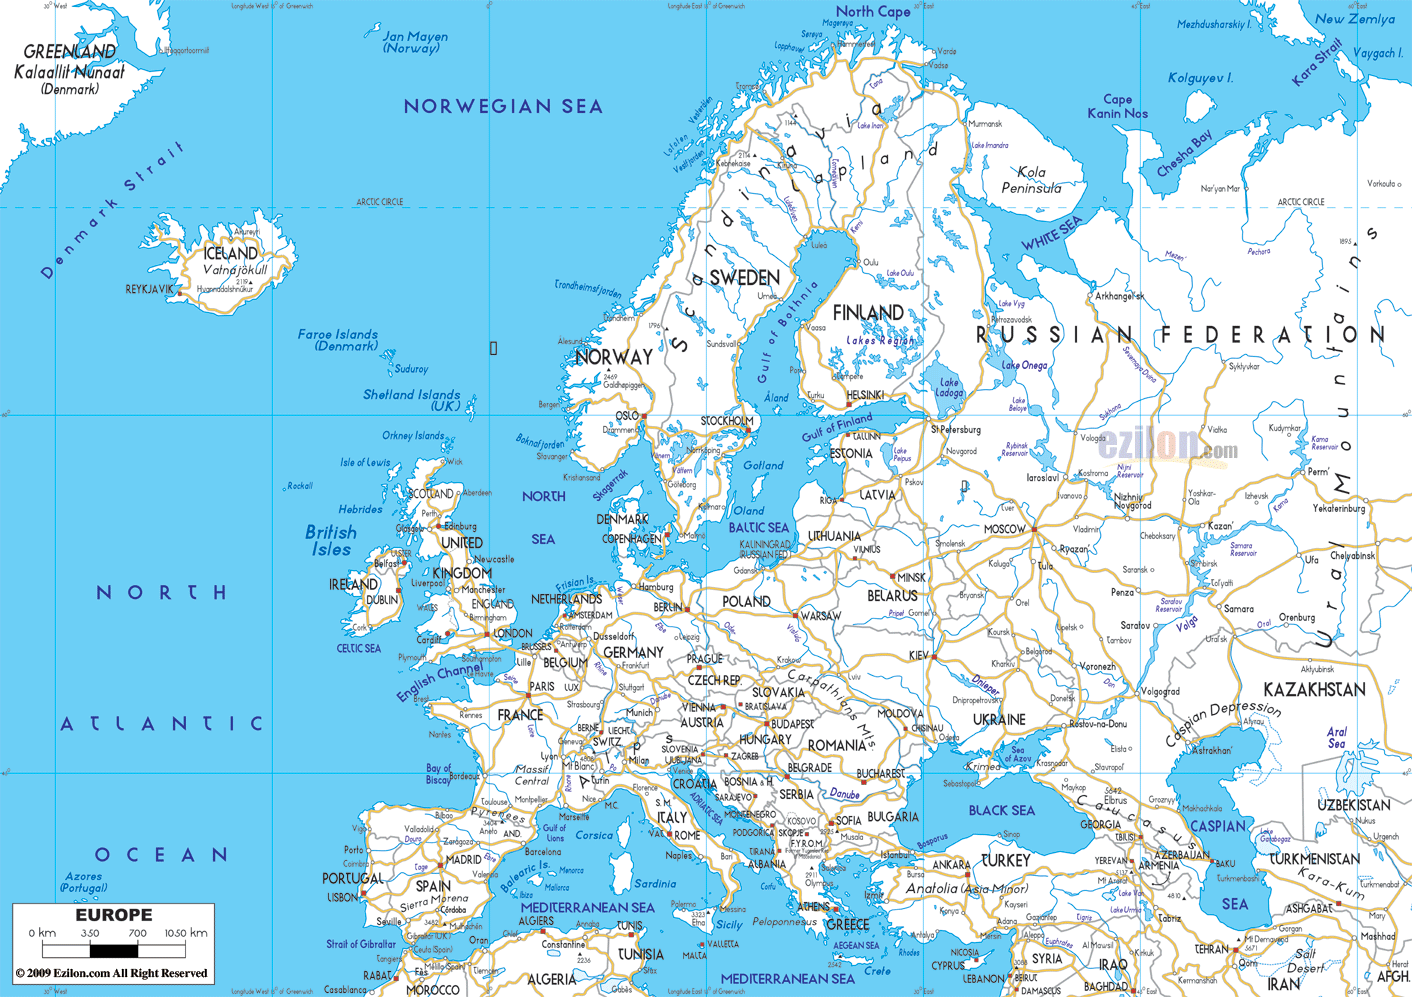 printable europe travel map